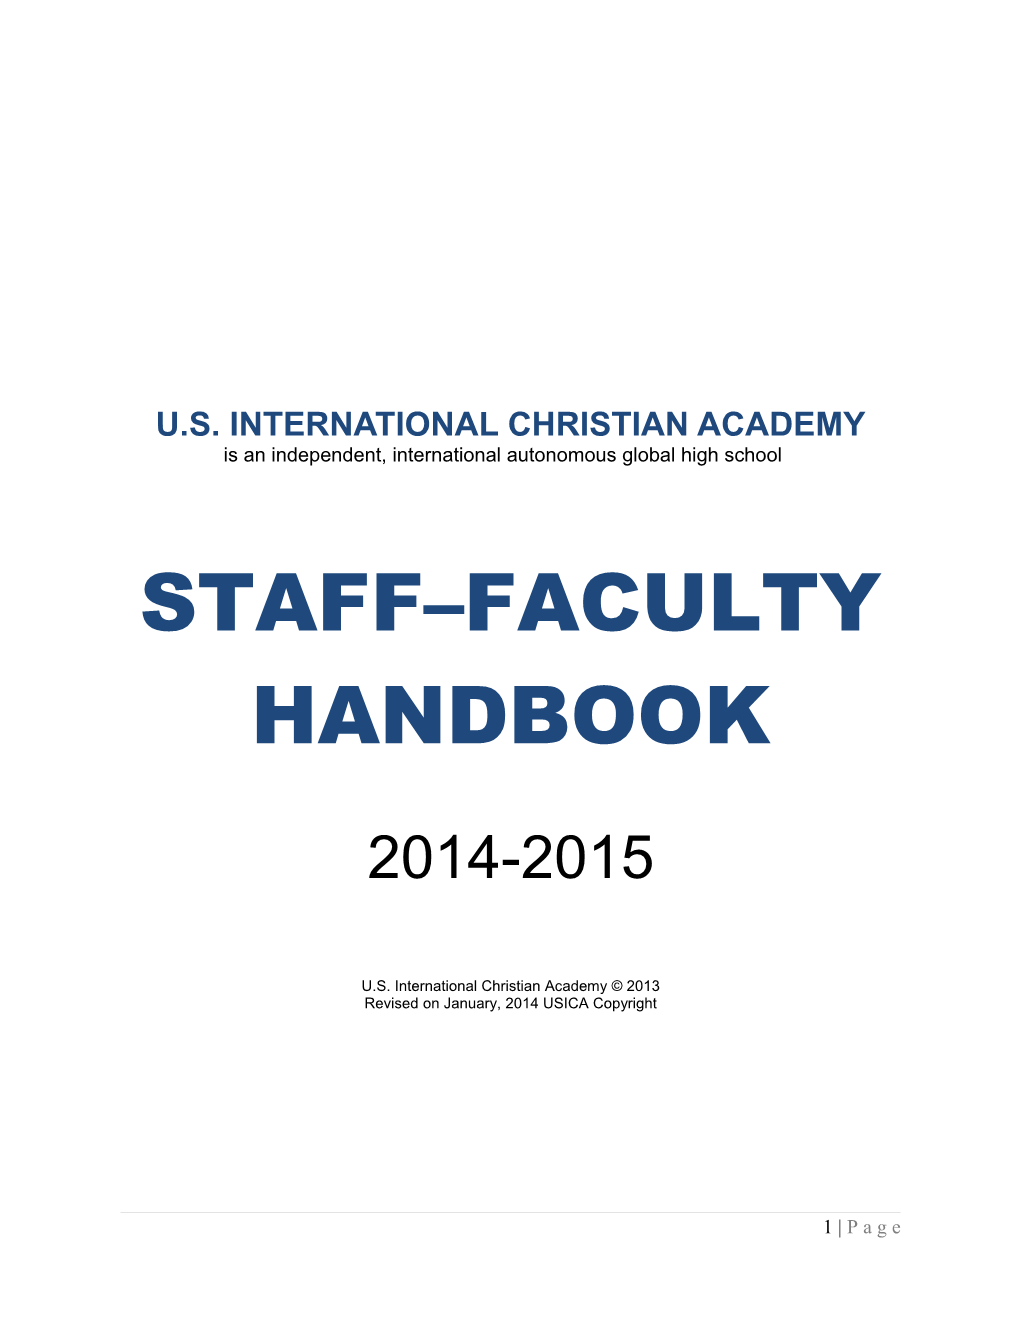 U.S. International Christian Academy